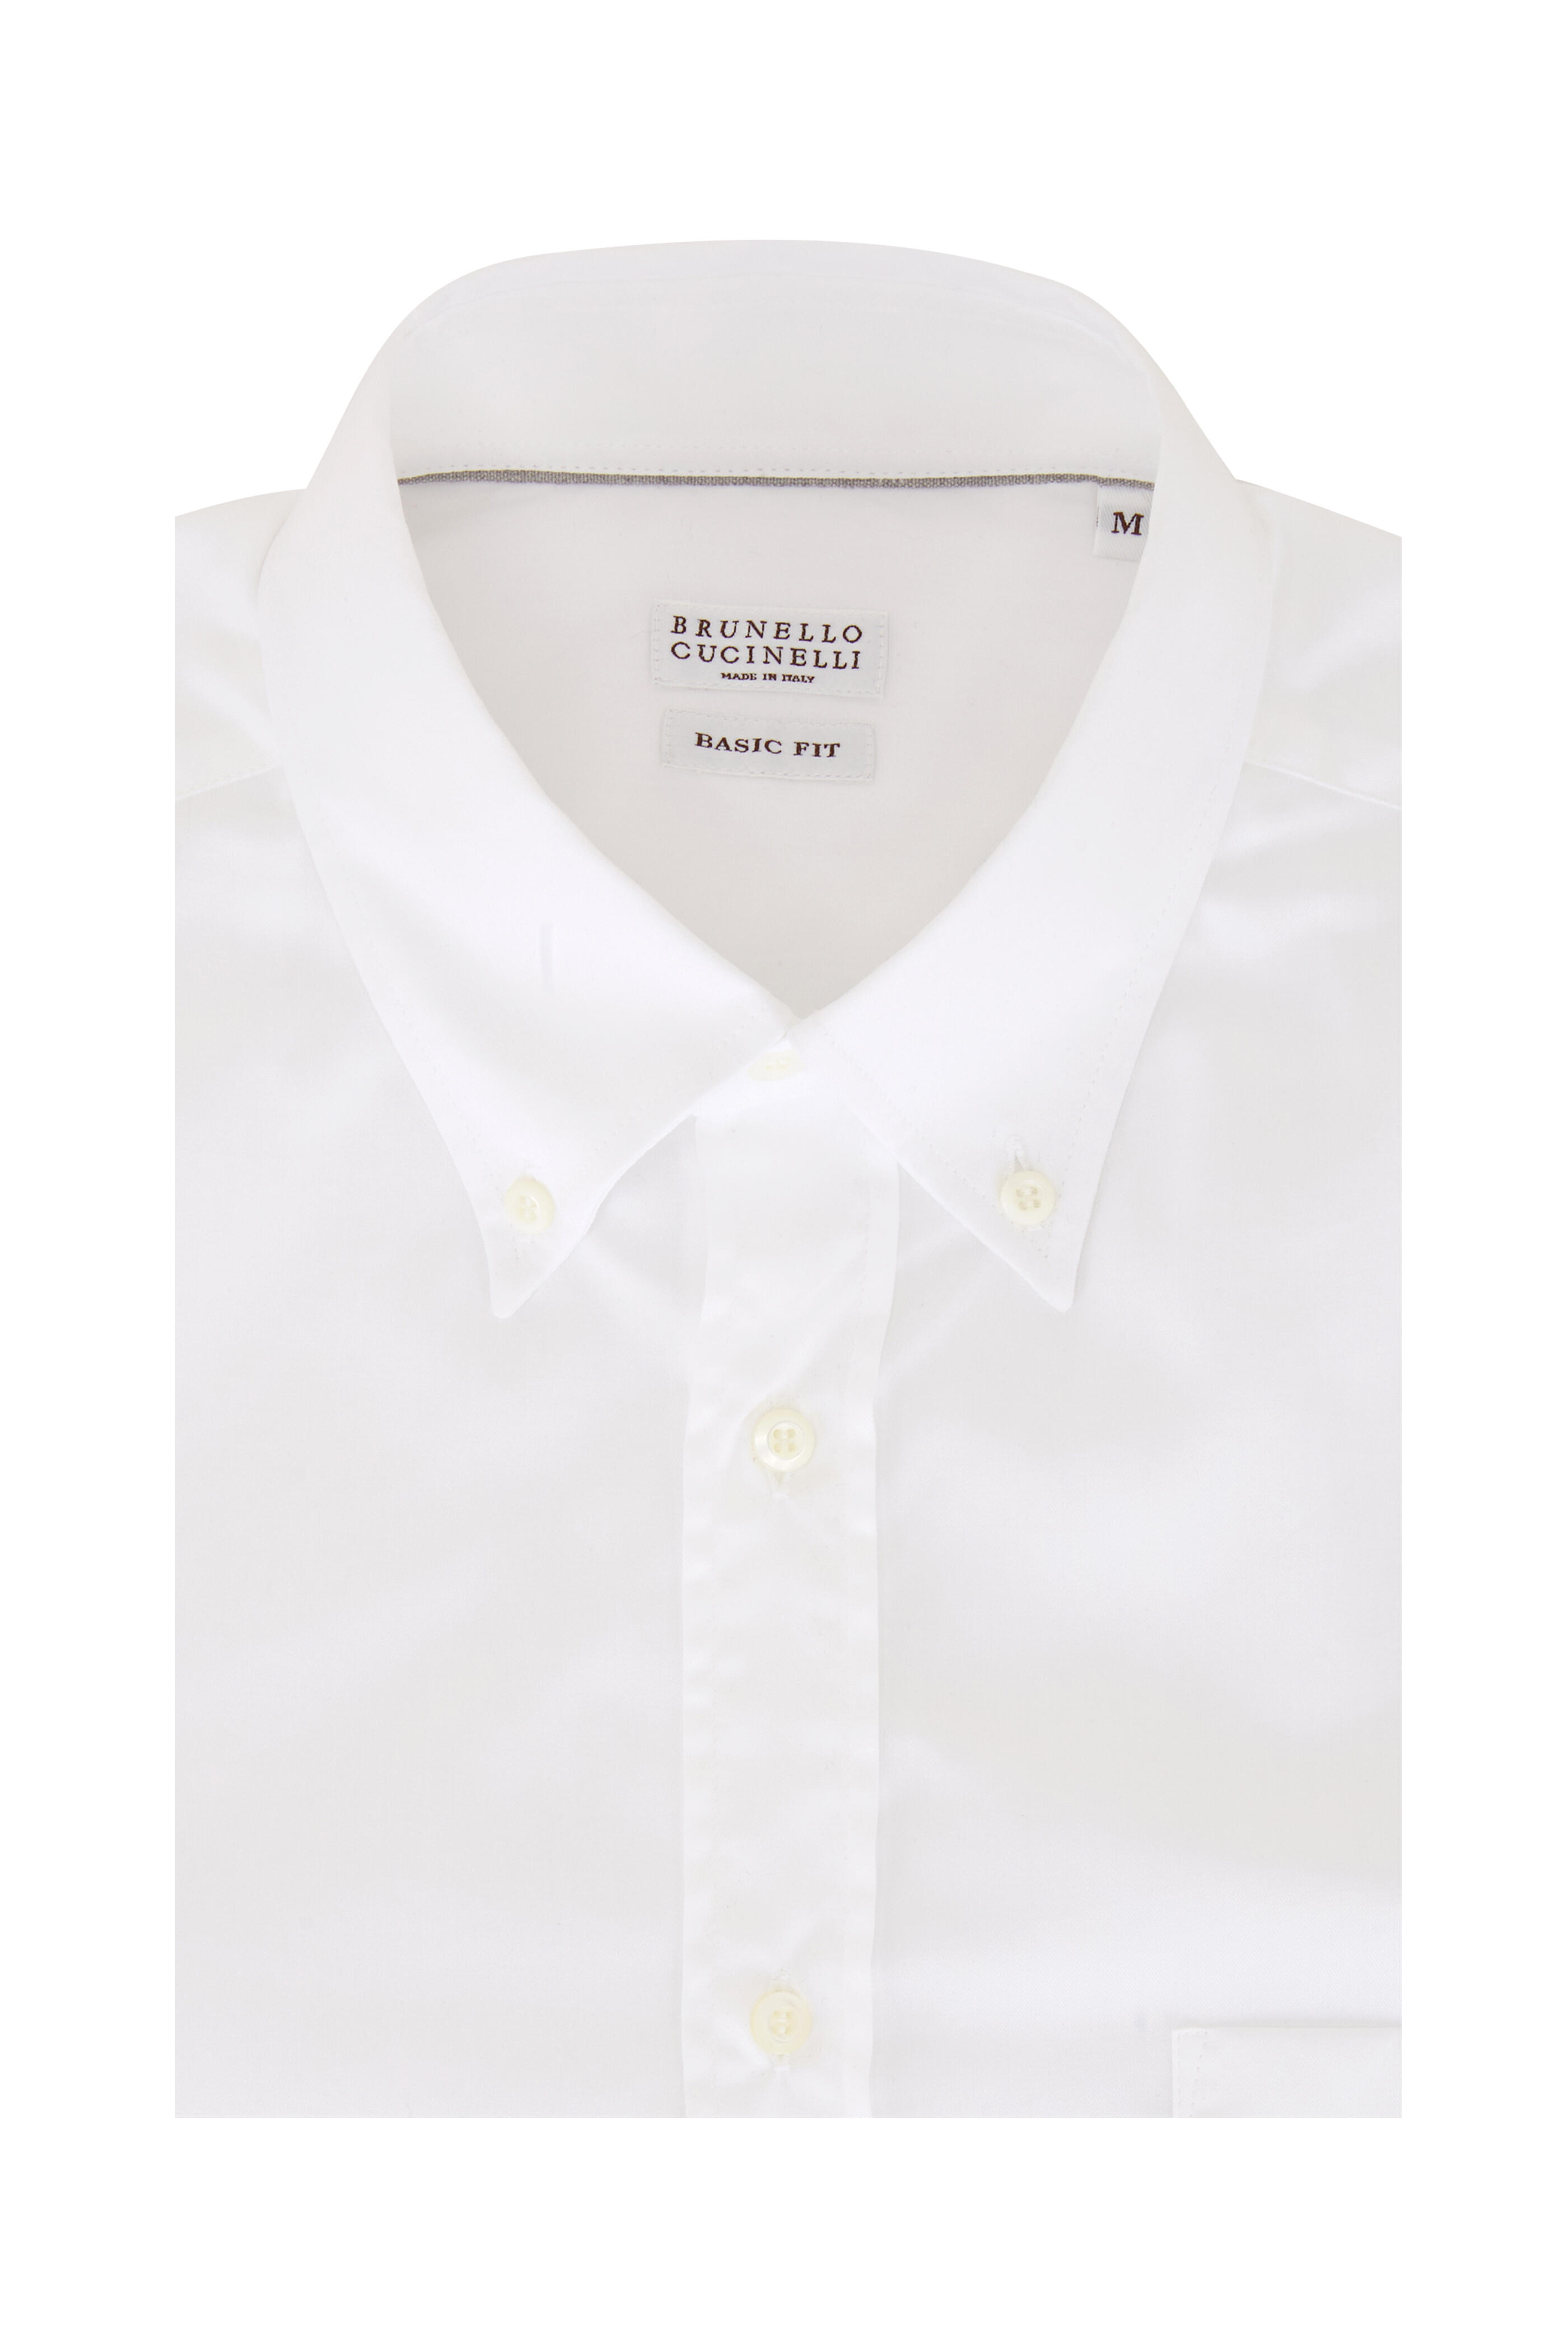 Brunello Cucinelli - White Button Down Sport Shirt